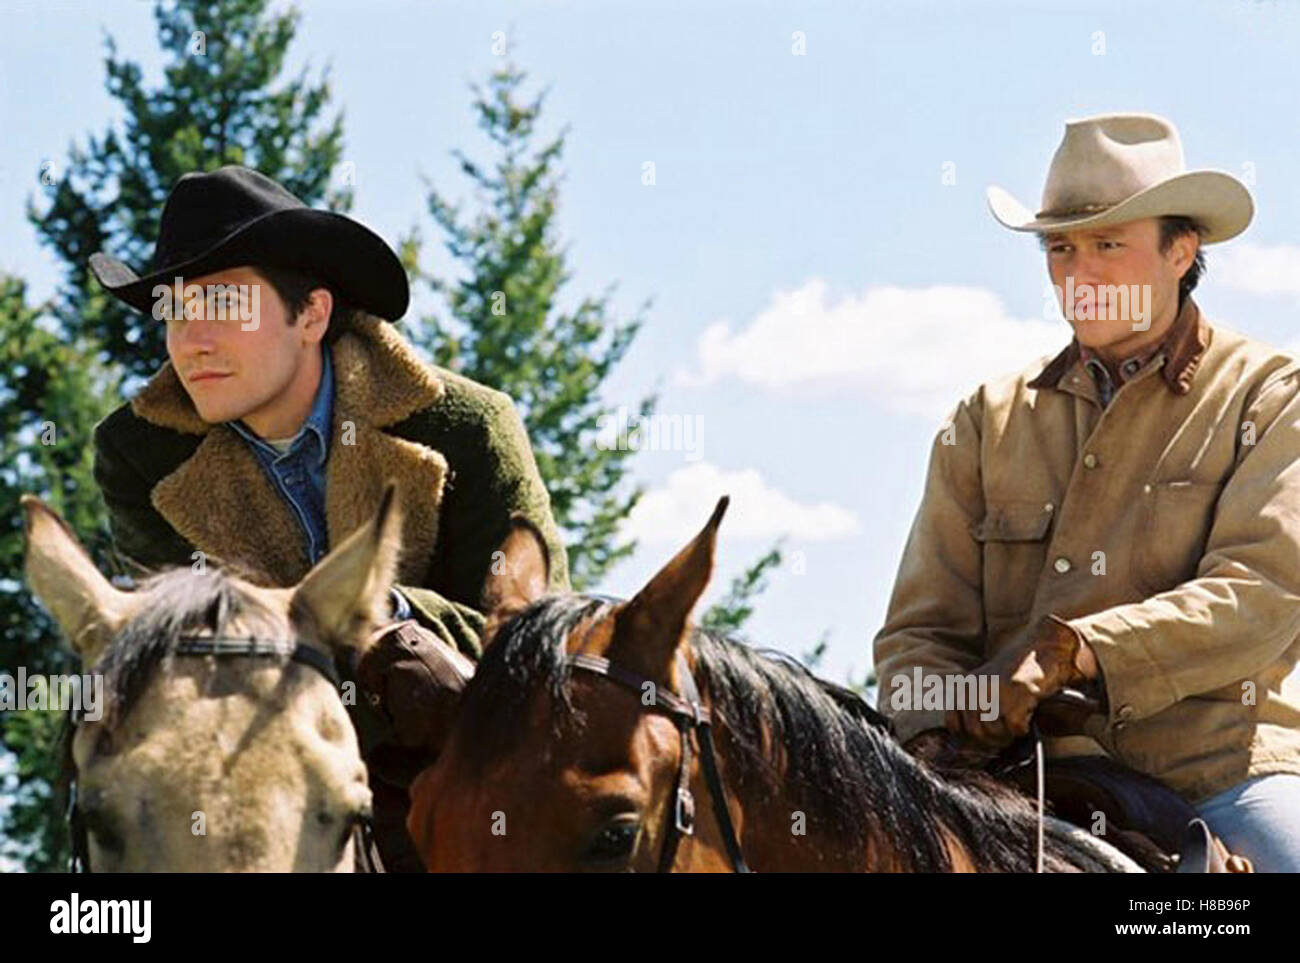 Brokeback Mountain, (BROKEBACK MOUNTAIN) USA 2005, Regie: Ang Lee, JAKE GYLLENHAAL, HEATH LEDGER, Key: Cowboy, Cowboyhut Stock Photo